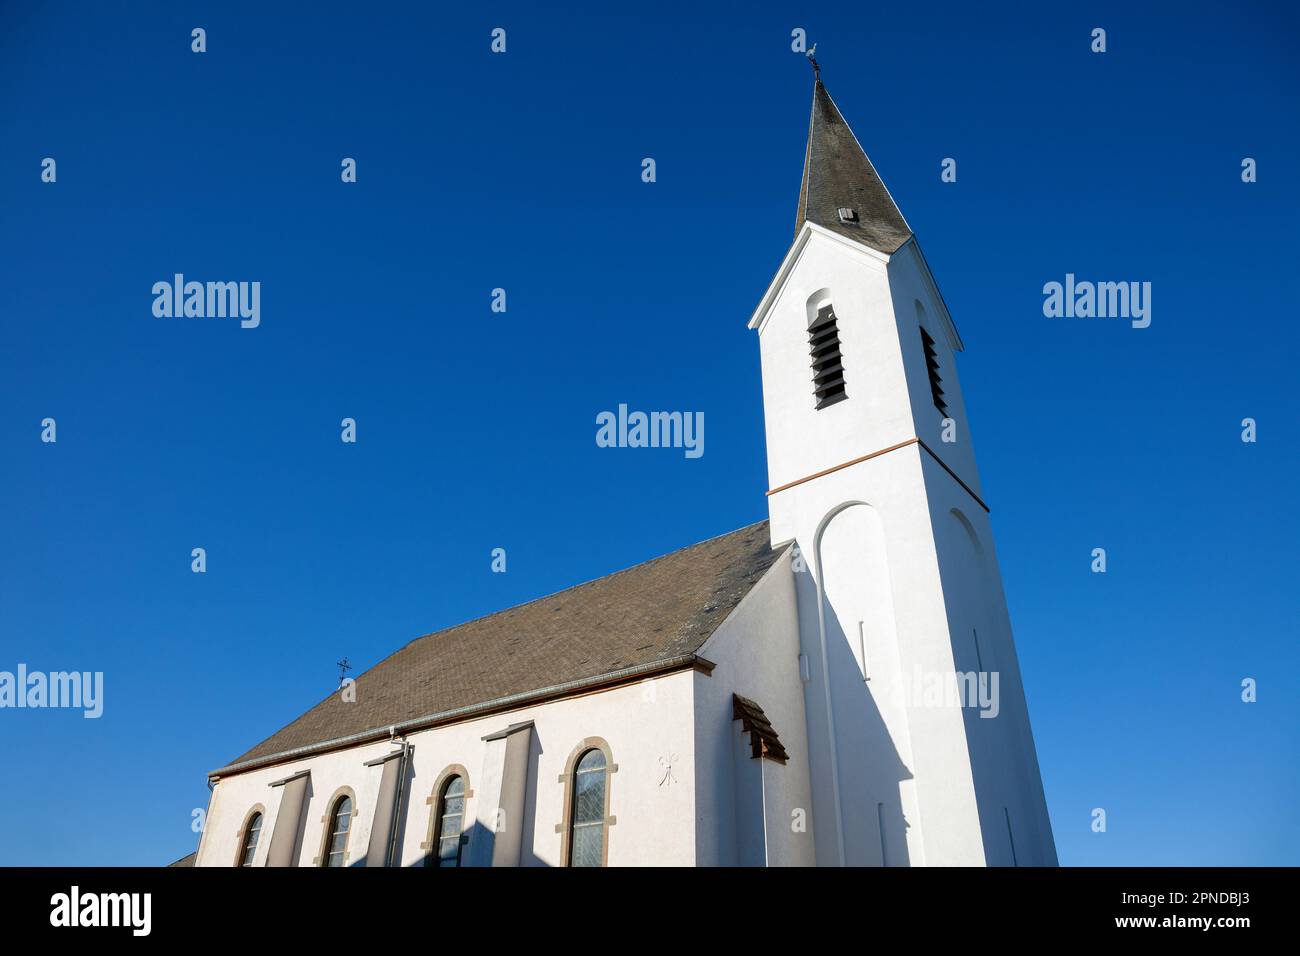 Europa, Lussemburgo, Distretto di Diekirch, Heiderscheid, Chiesa di Saint-Pierre-aux-Liens (Église Saint-Pierre-aux-Liens) Foto Stock